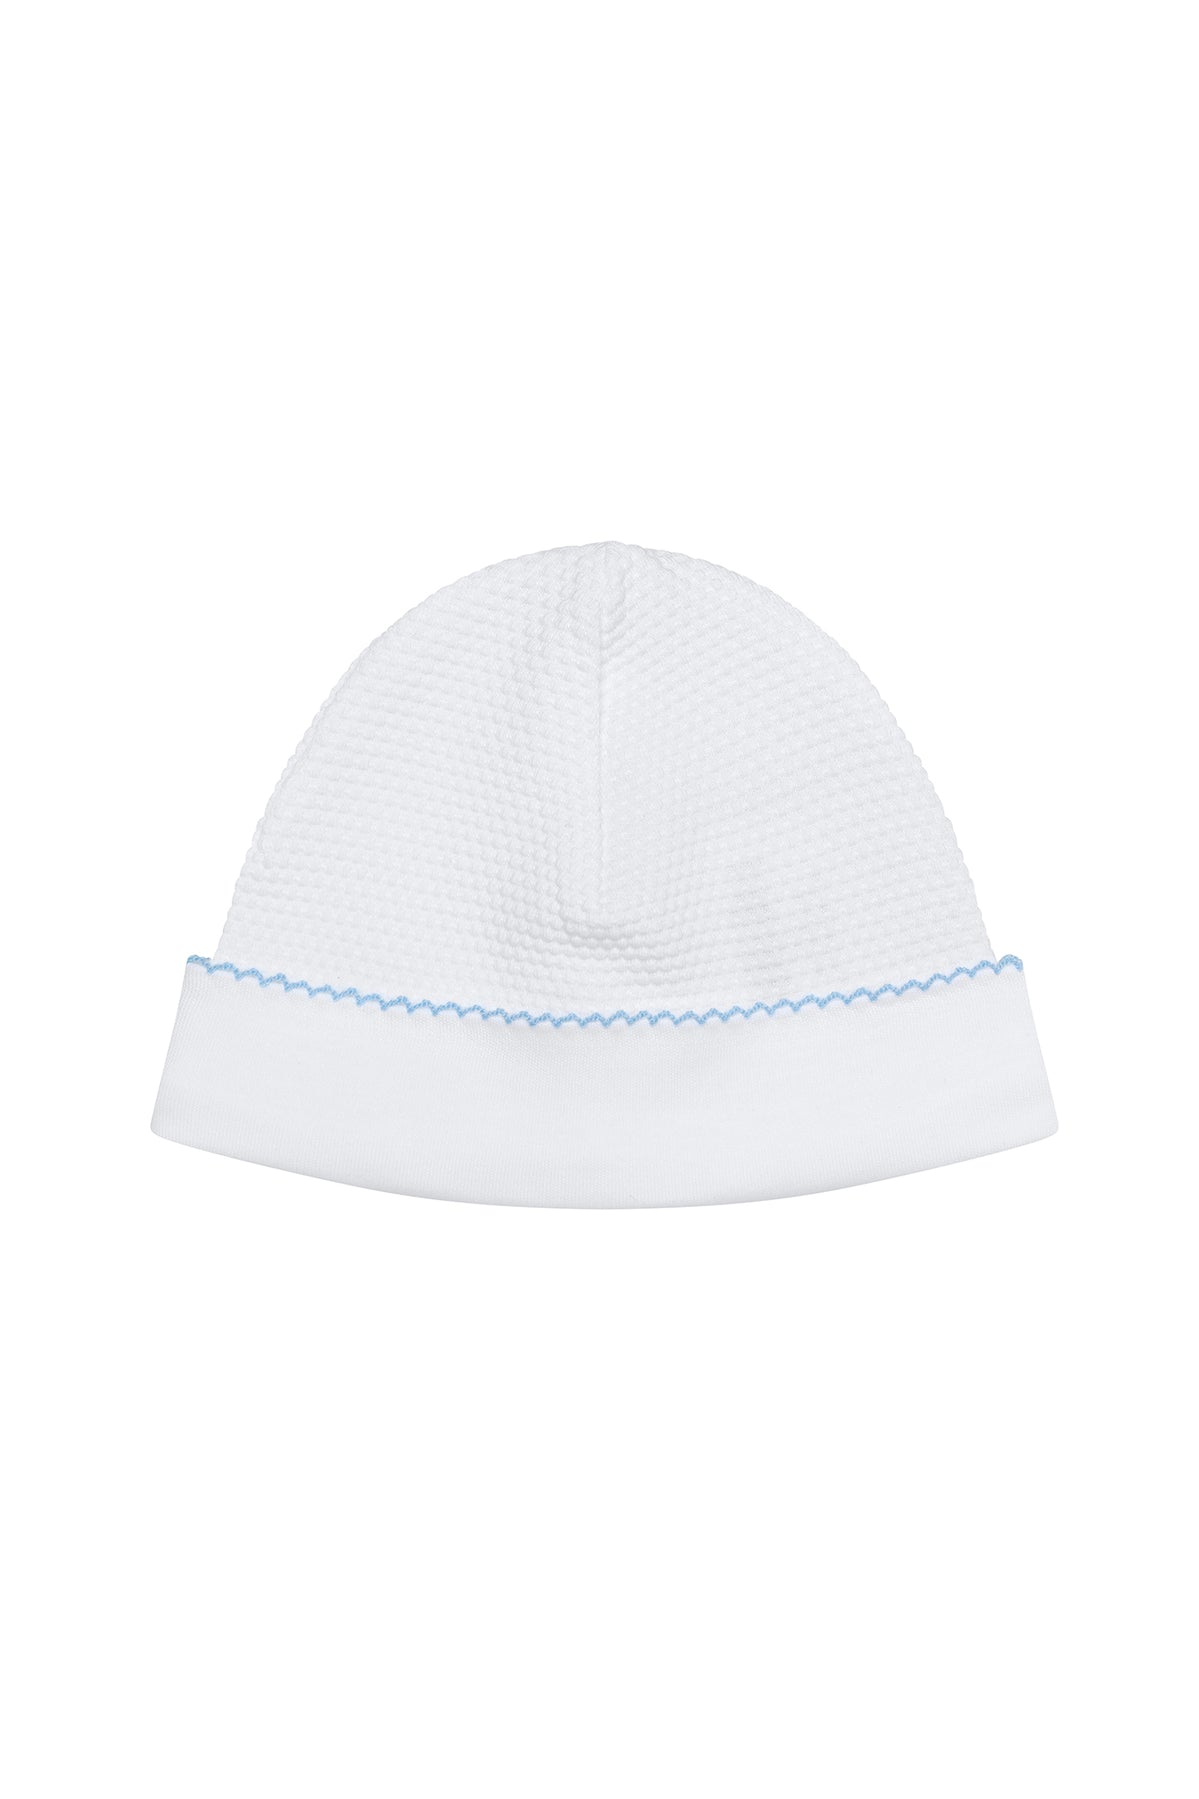 White Bubble Baby Hat, Blue Picot